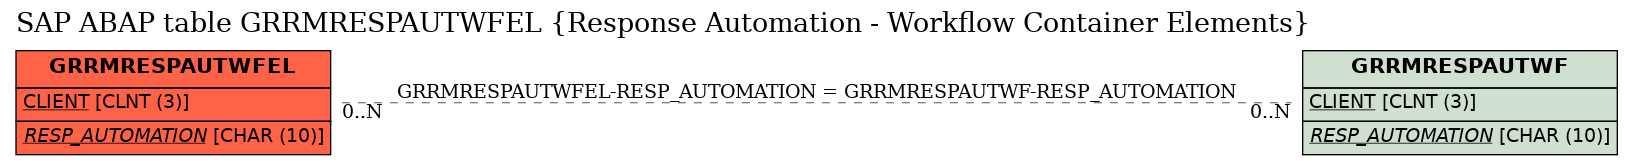 E-R Diagram for table GRRMRESPAUTWFEL (Response Automation - Workflow Container Elements)